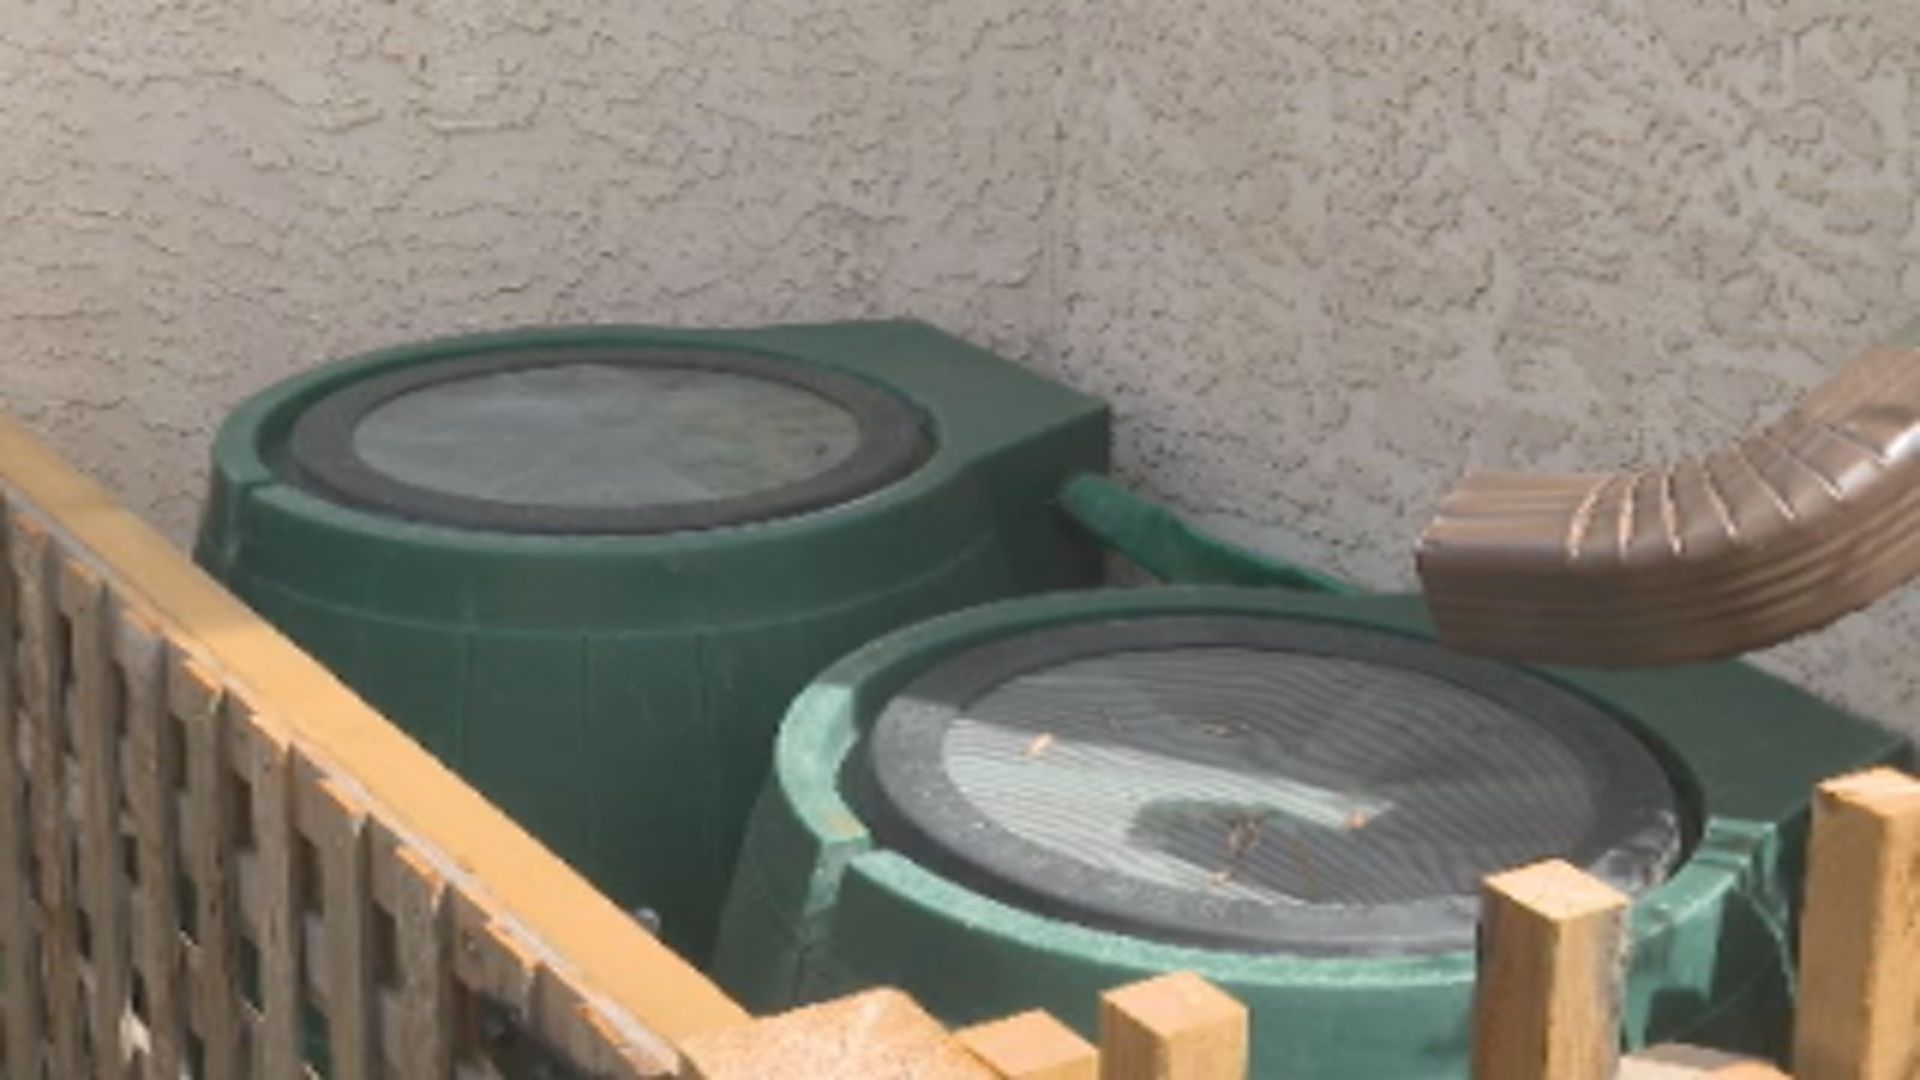 Rain barrel usage increasing in southern Alberta